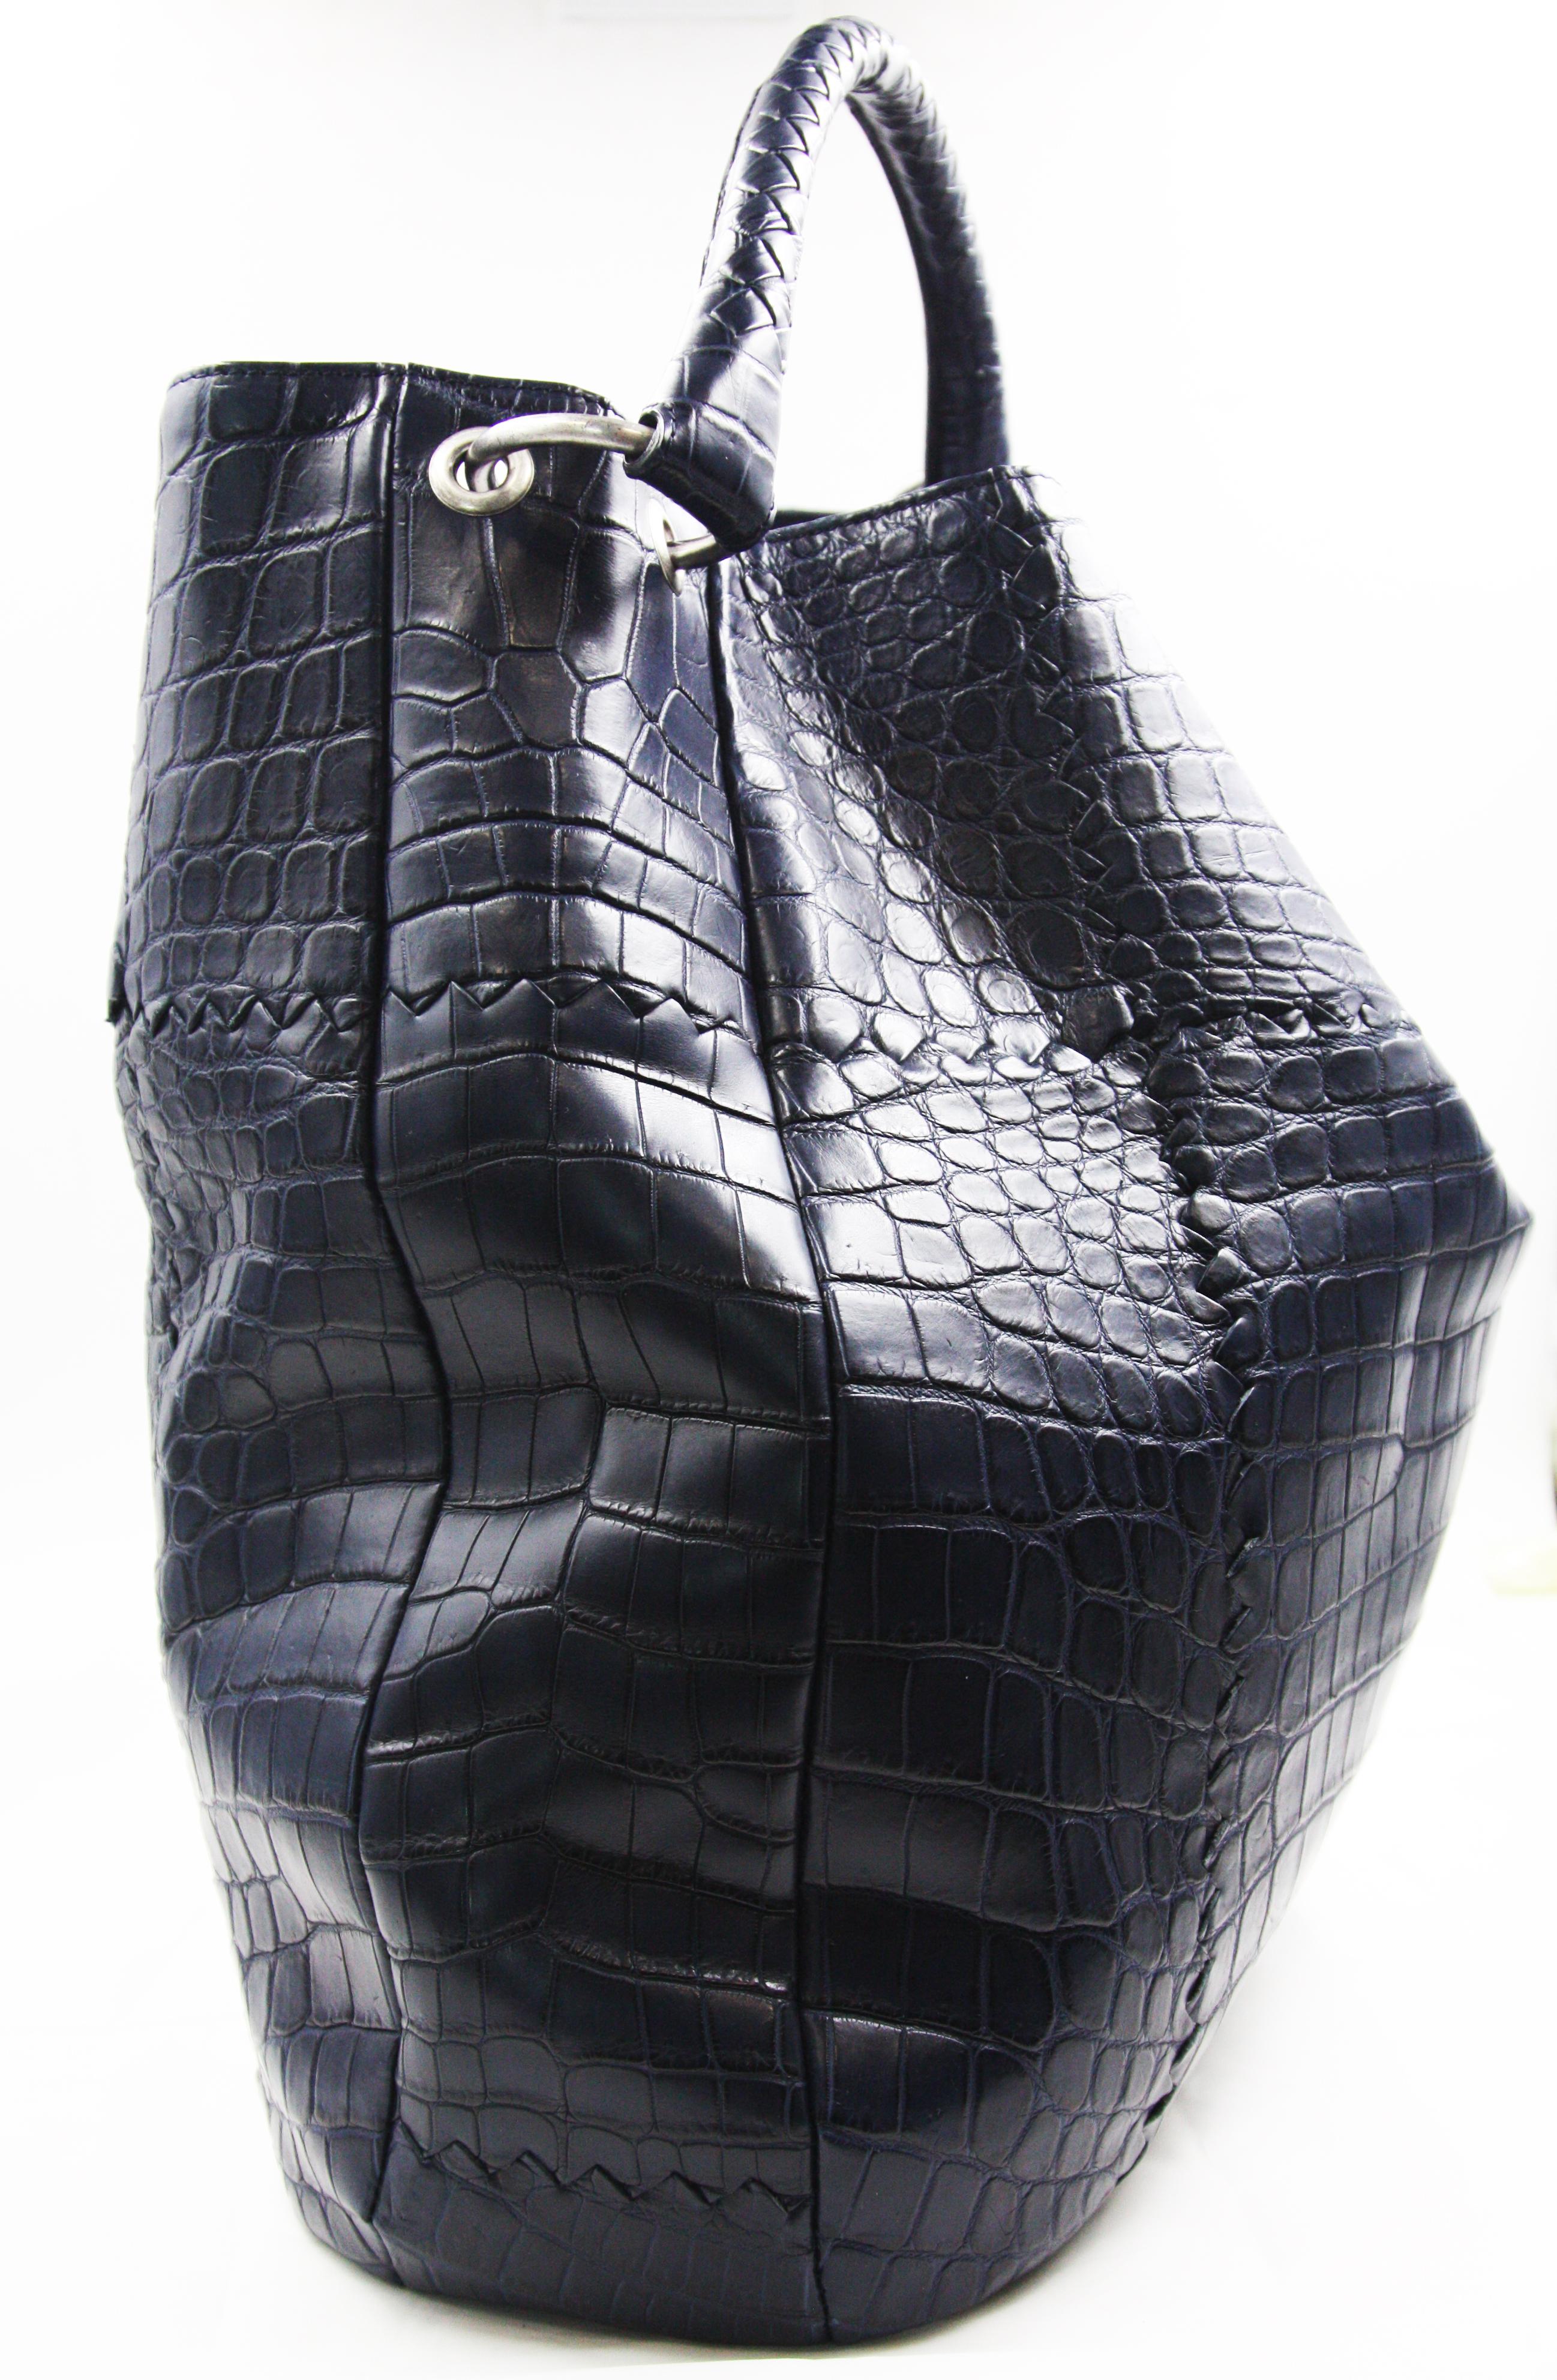 Bottega Veneta dark blue Crocodile Skin shoulder bag
Includes: Dustbag.

